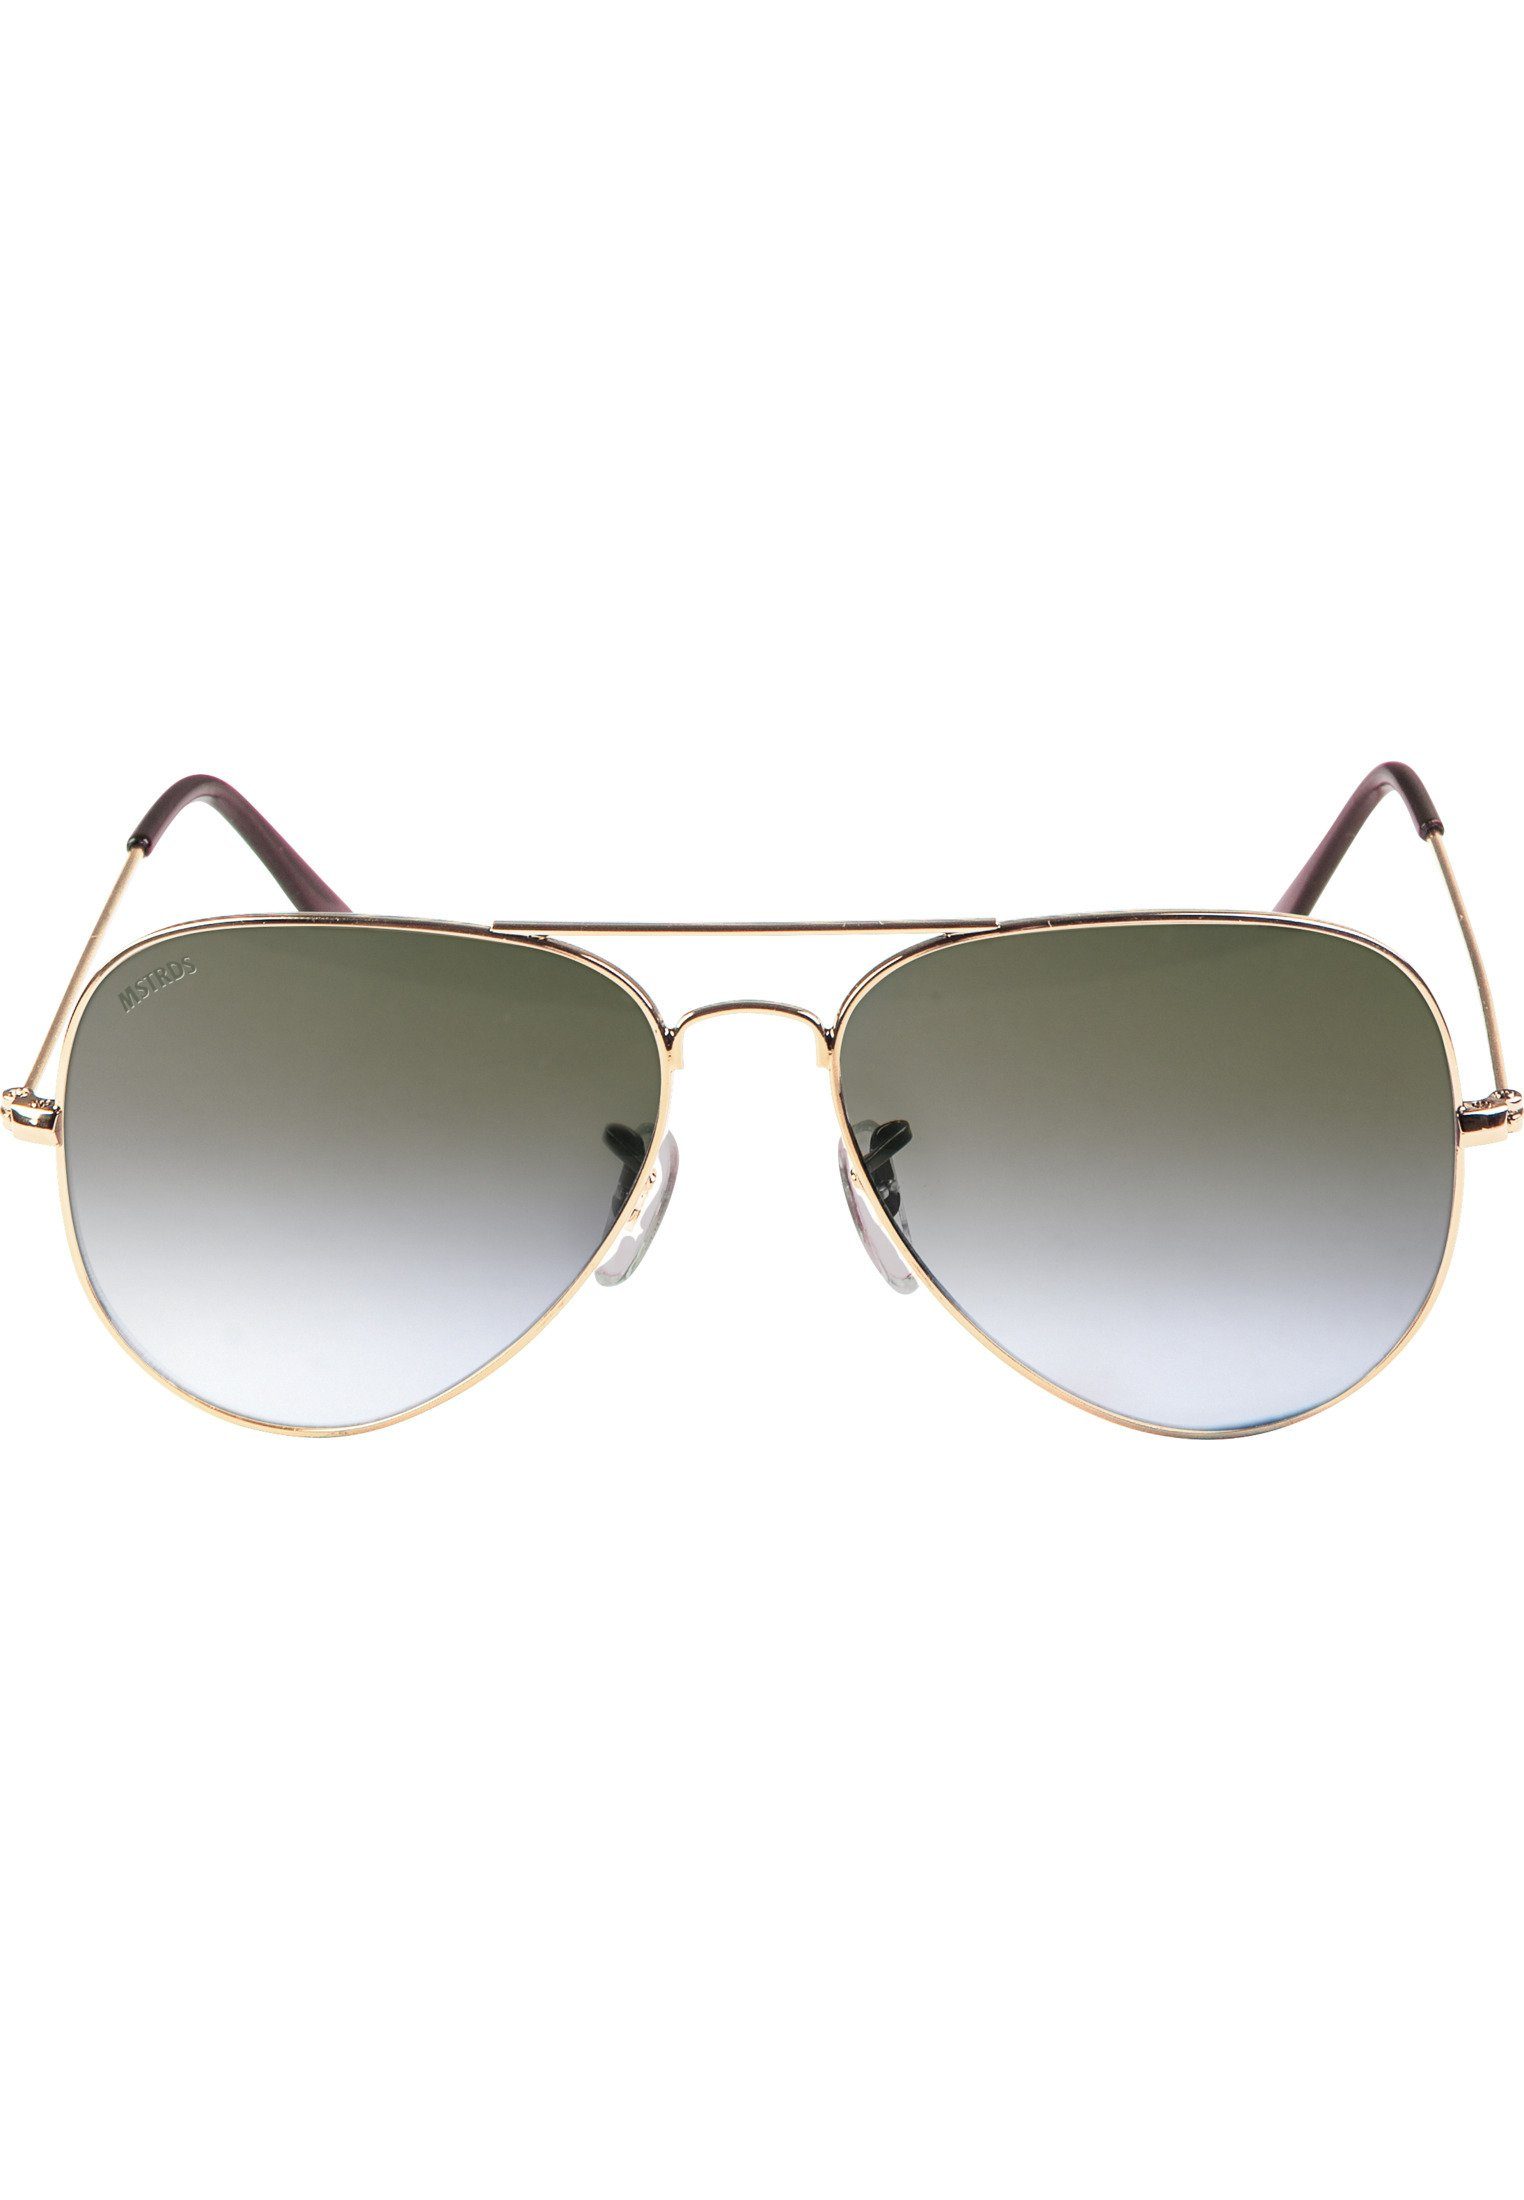 MSTRDS Sonnenbrille Accessoires Sunglasses PureAv gold/brown